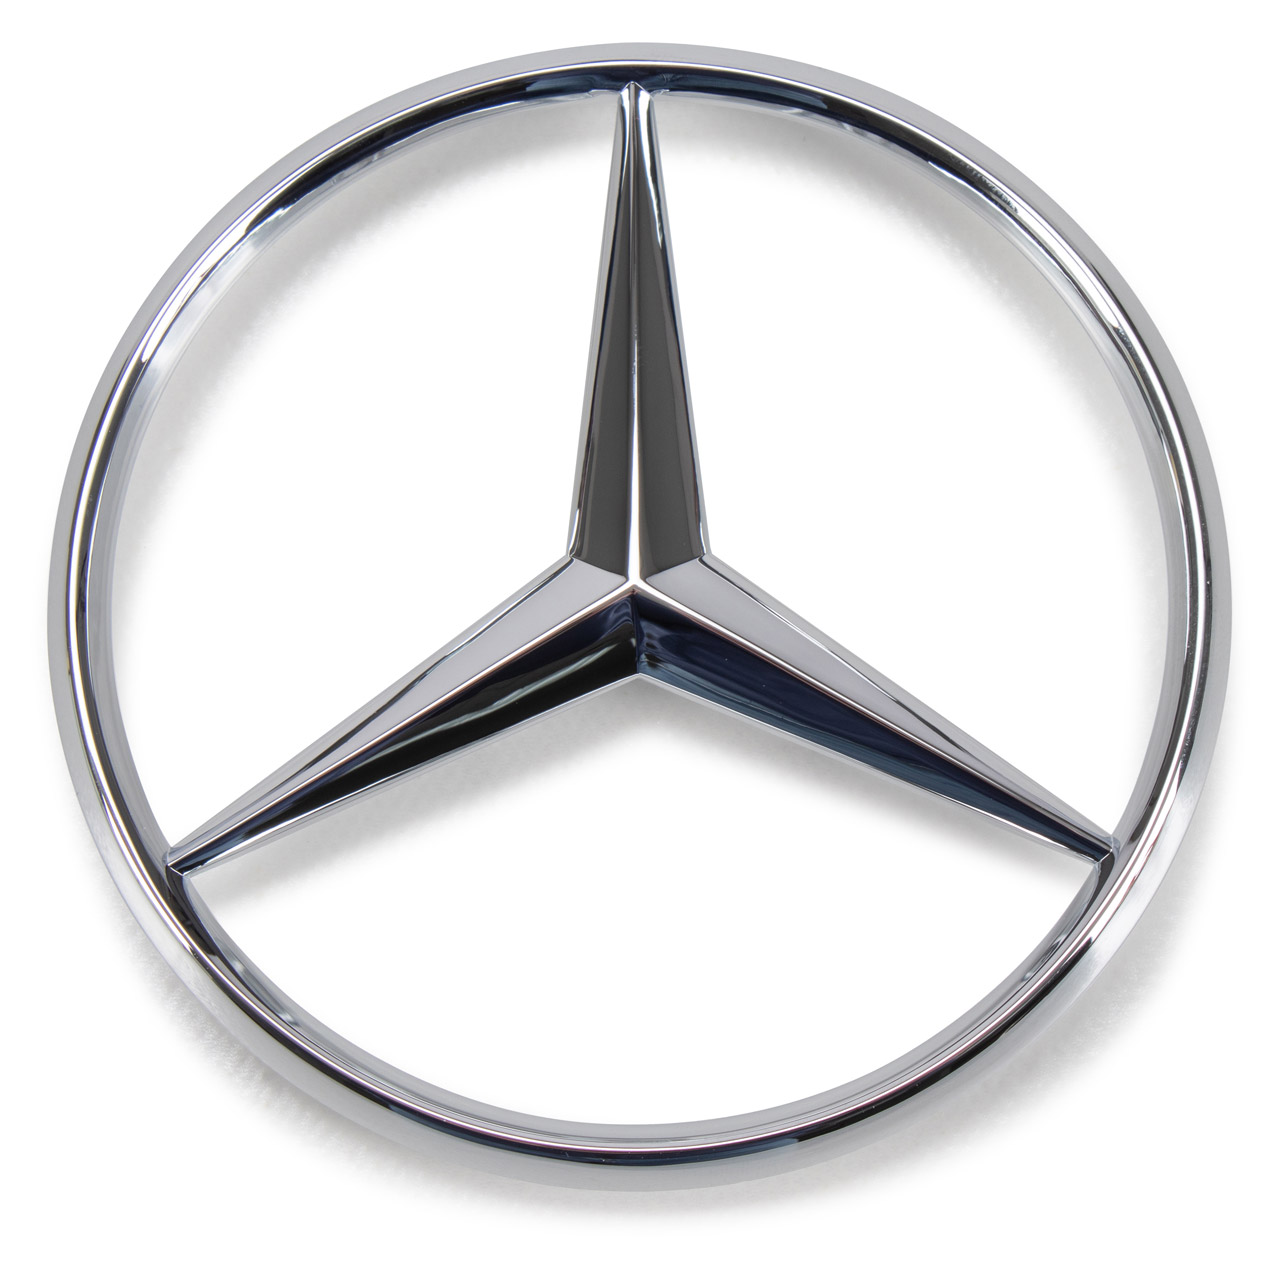 ORIGINAL Mercedes Stern Emblem Heckklappe Kofferraum 190 W201 W124 2017580058